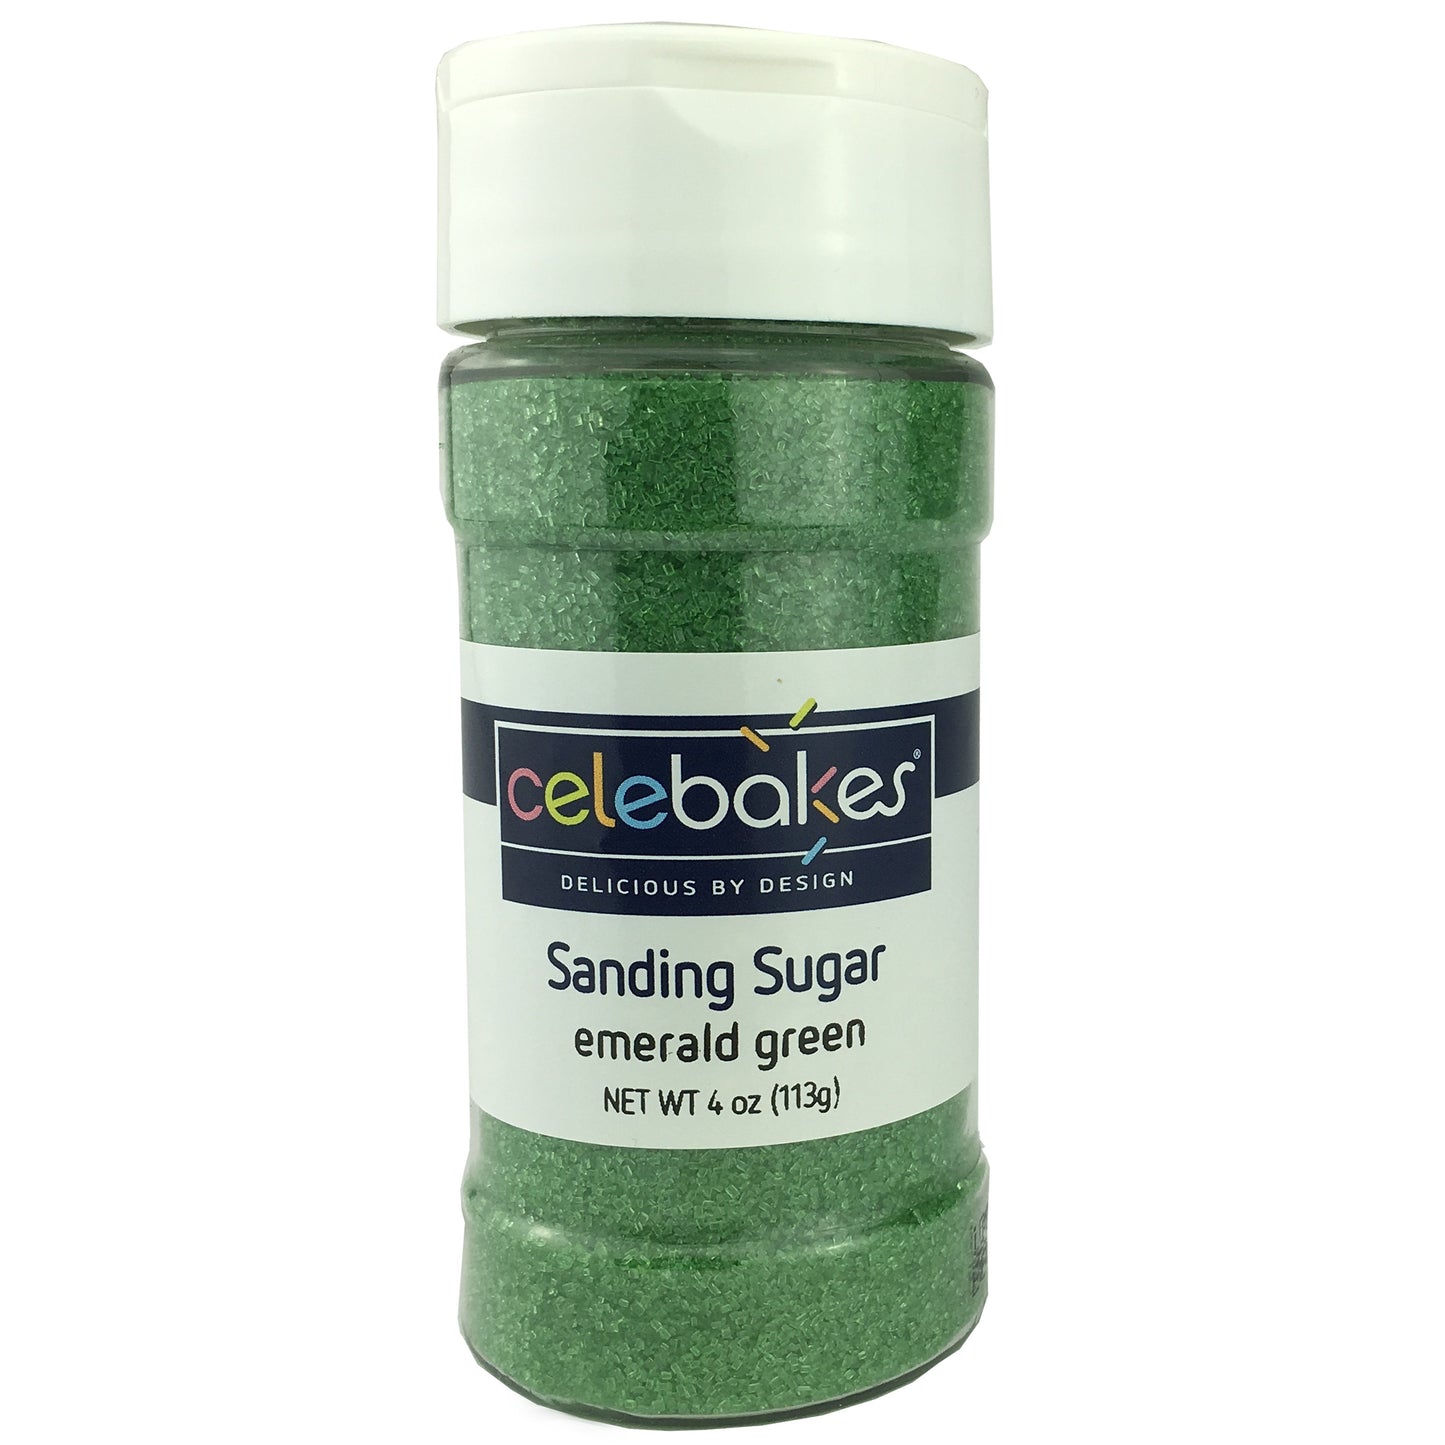 Celebakes Sanding Sugar Emerald Green 4oz